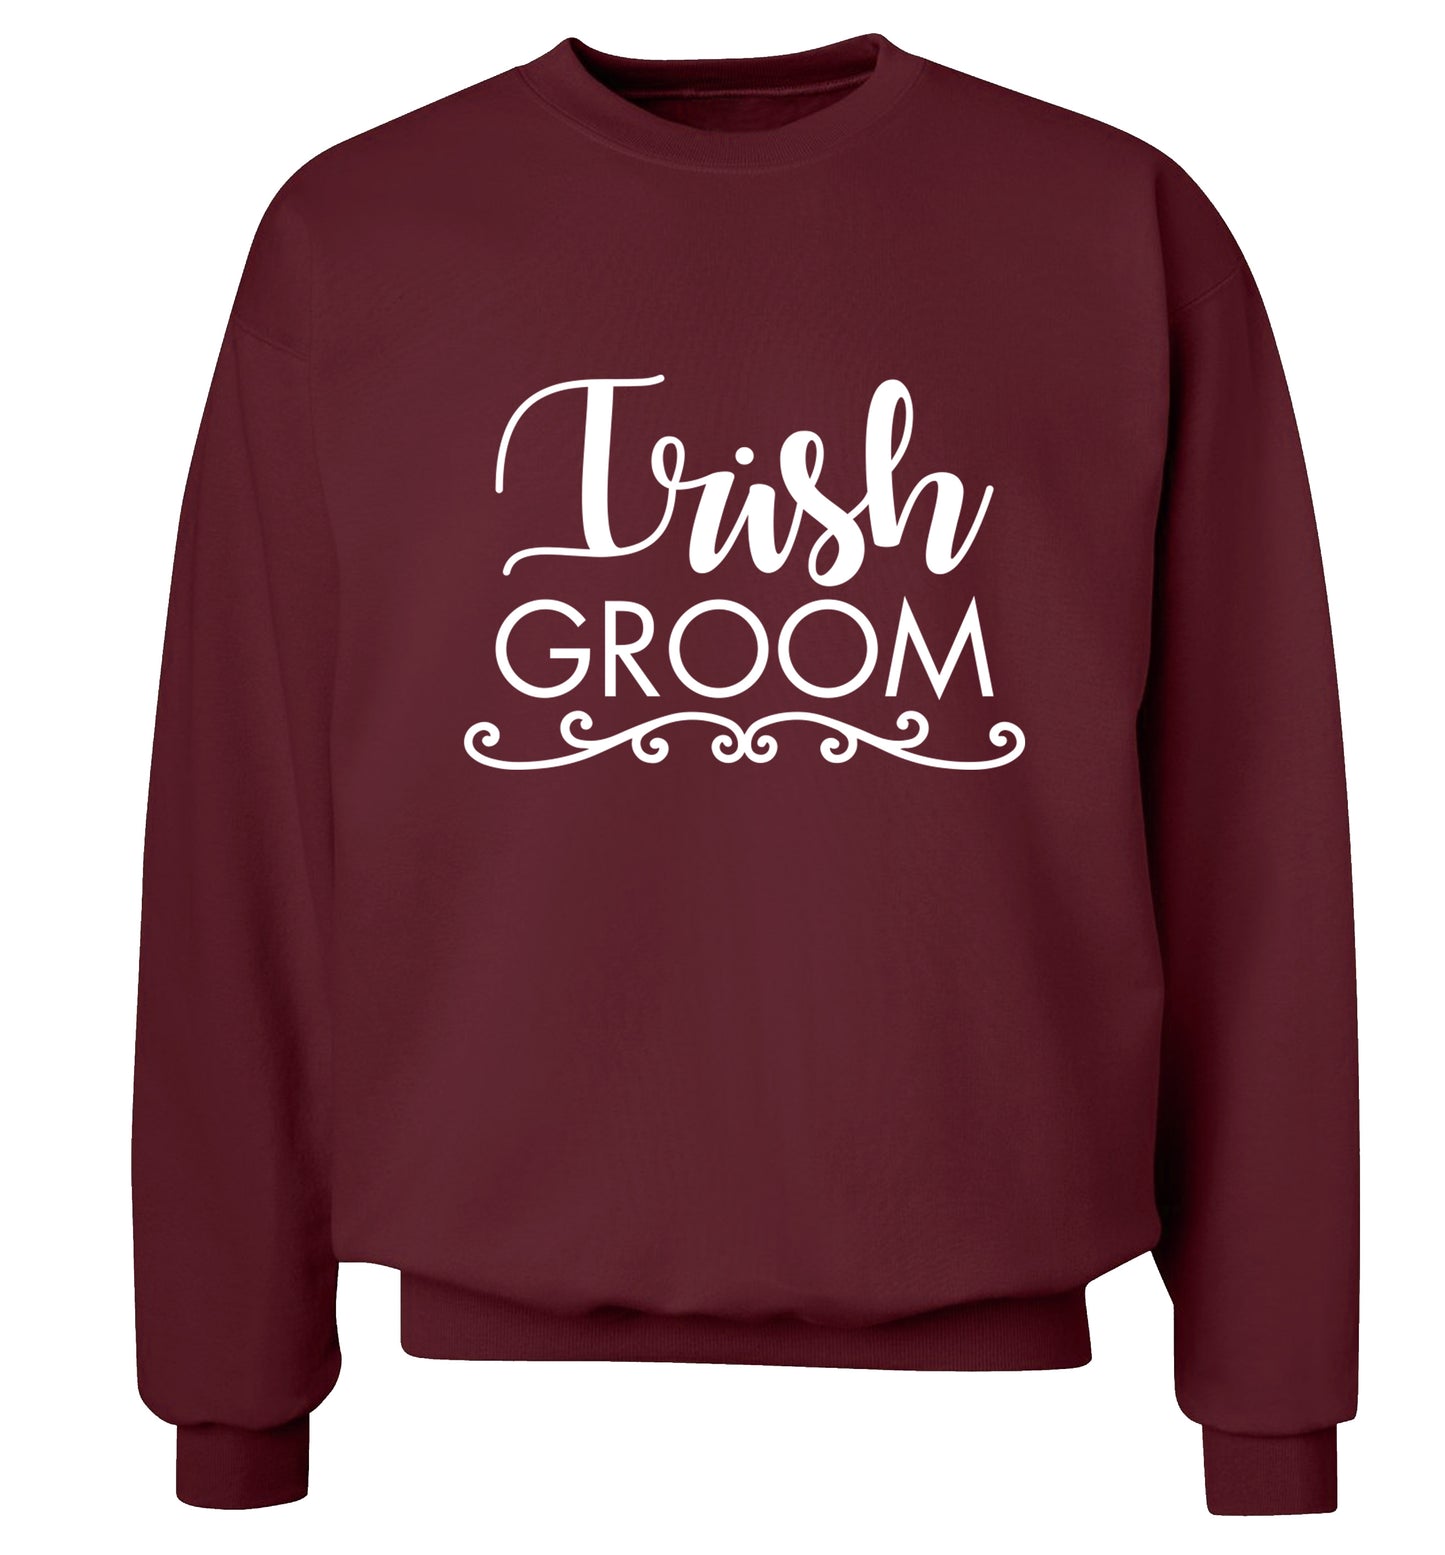 Irish groom Adult's unisex maroon Sweater 2XL